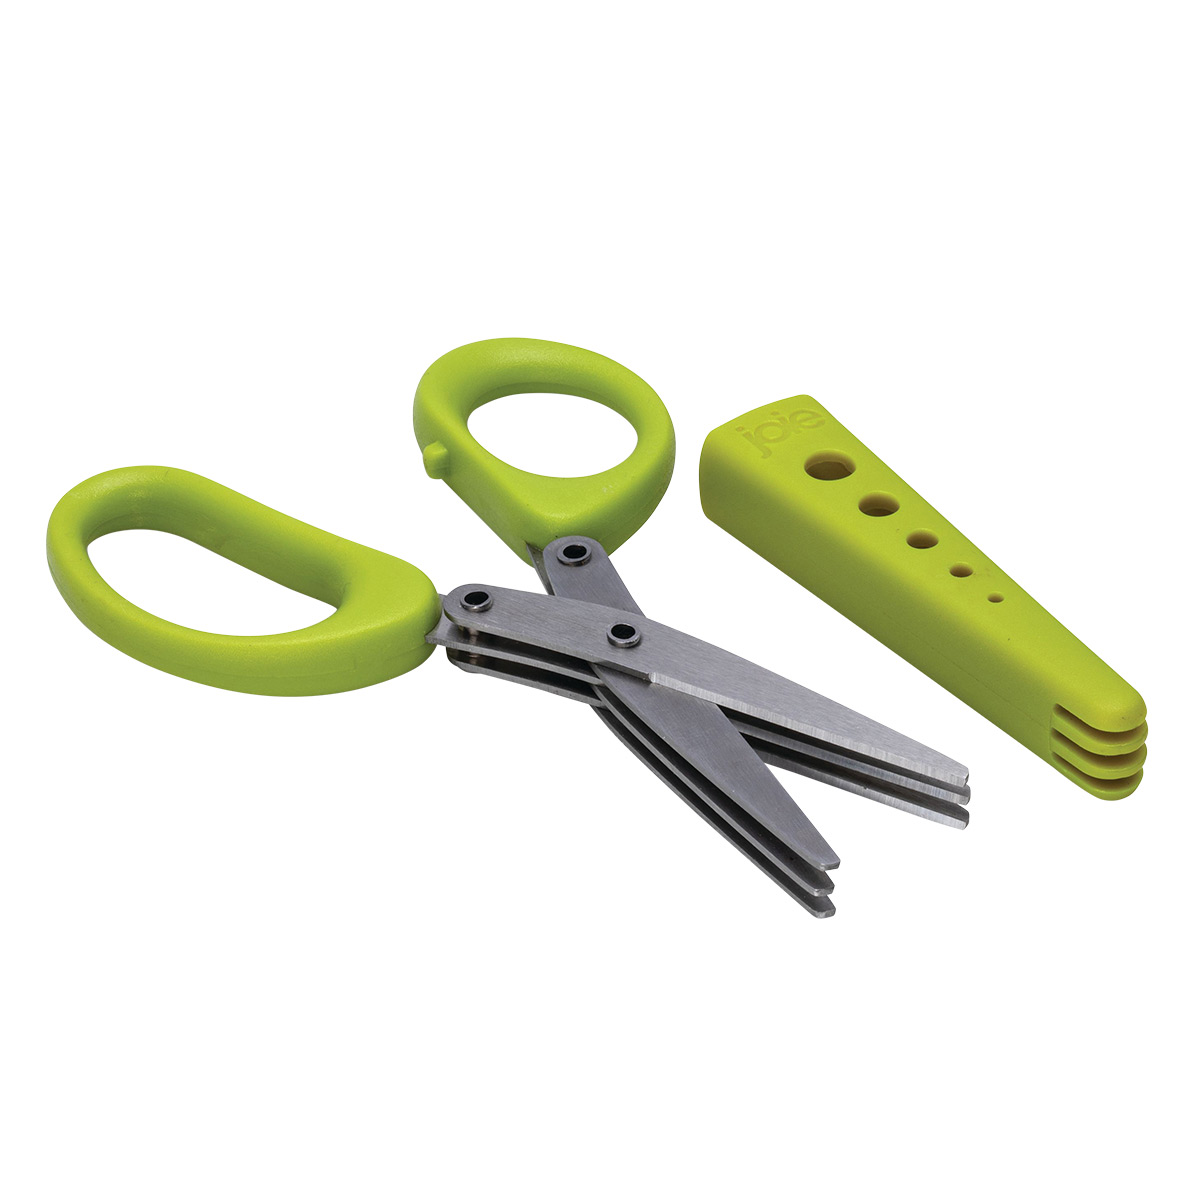 https://www.containerstore.com/catalogimages/457303/10090112-6-blade-herb-scissors-w-pro.jpg